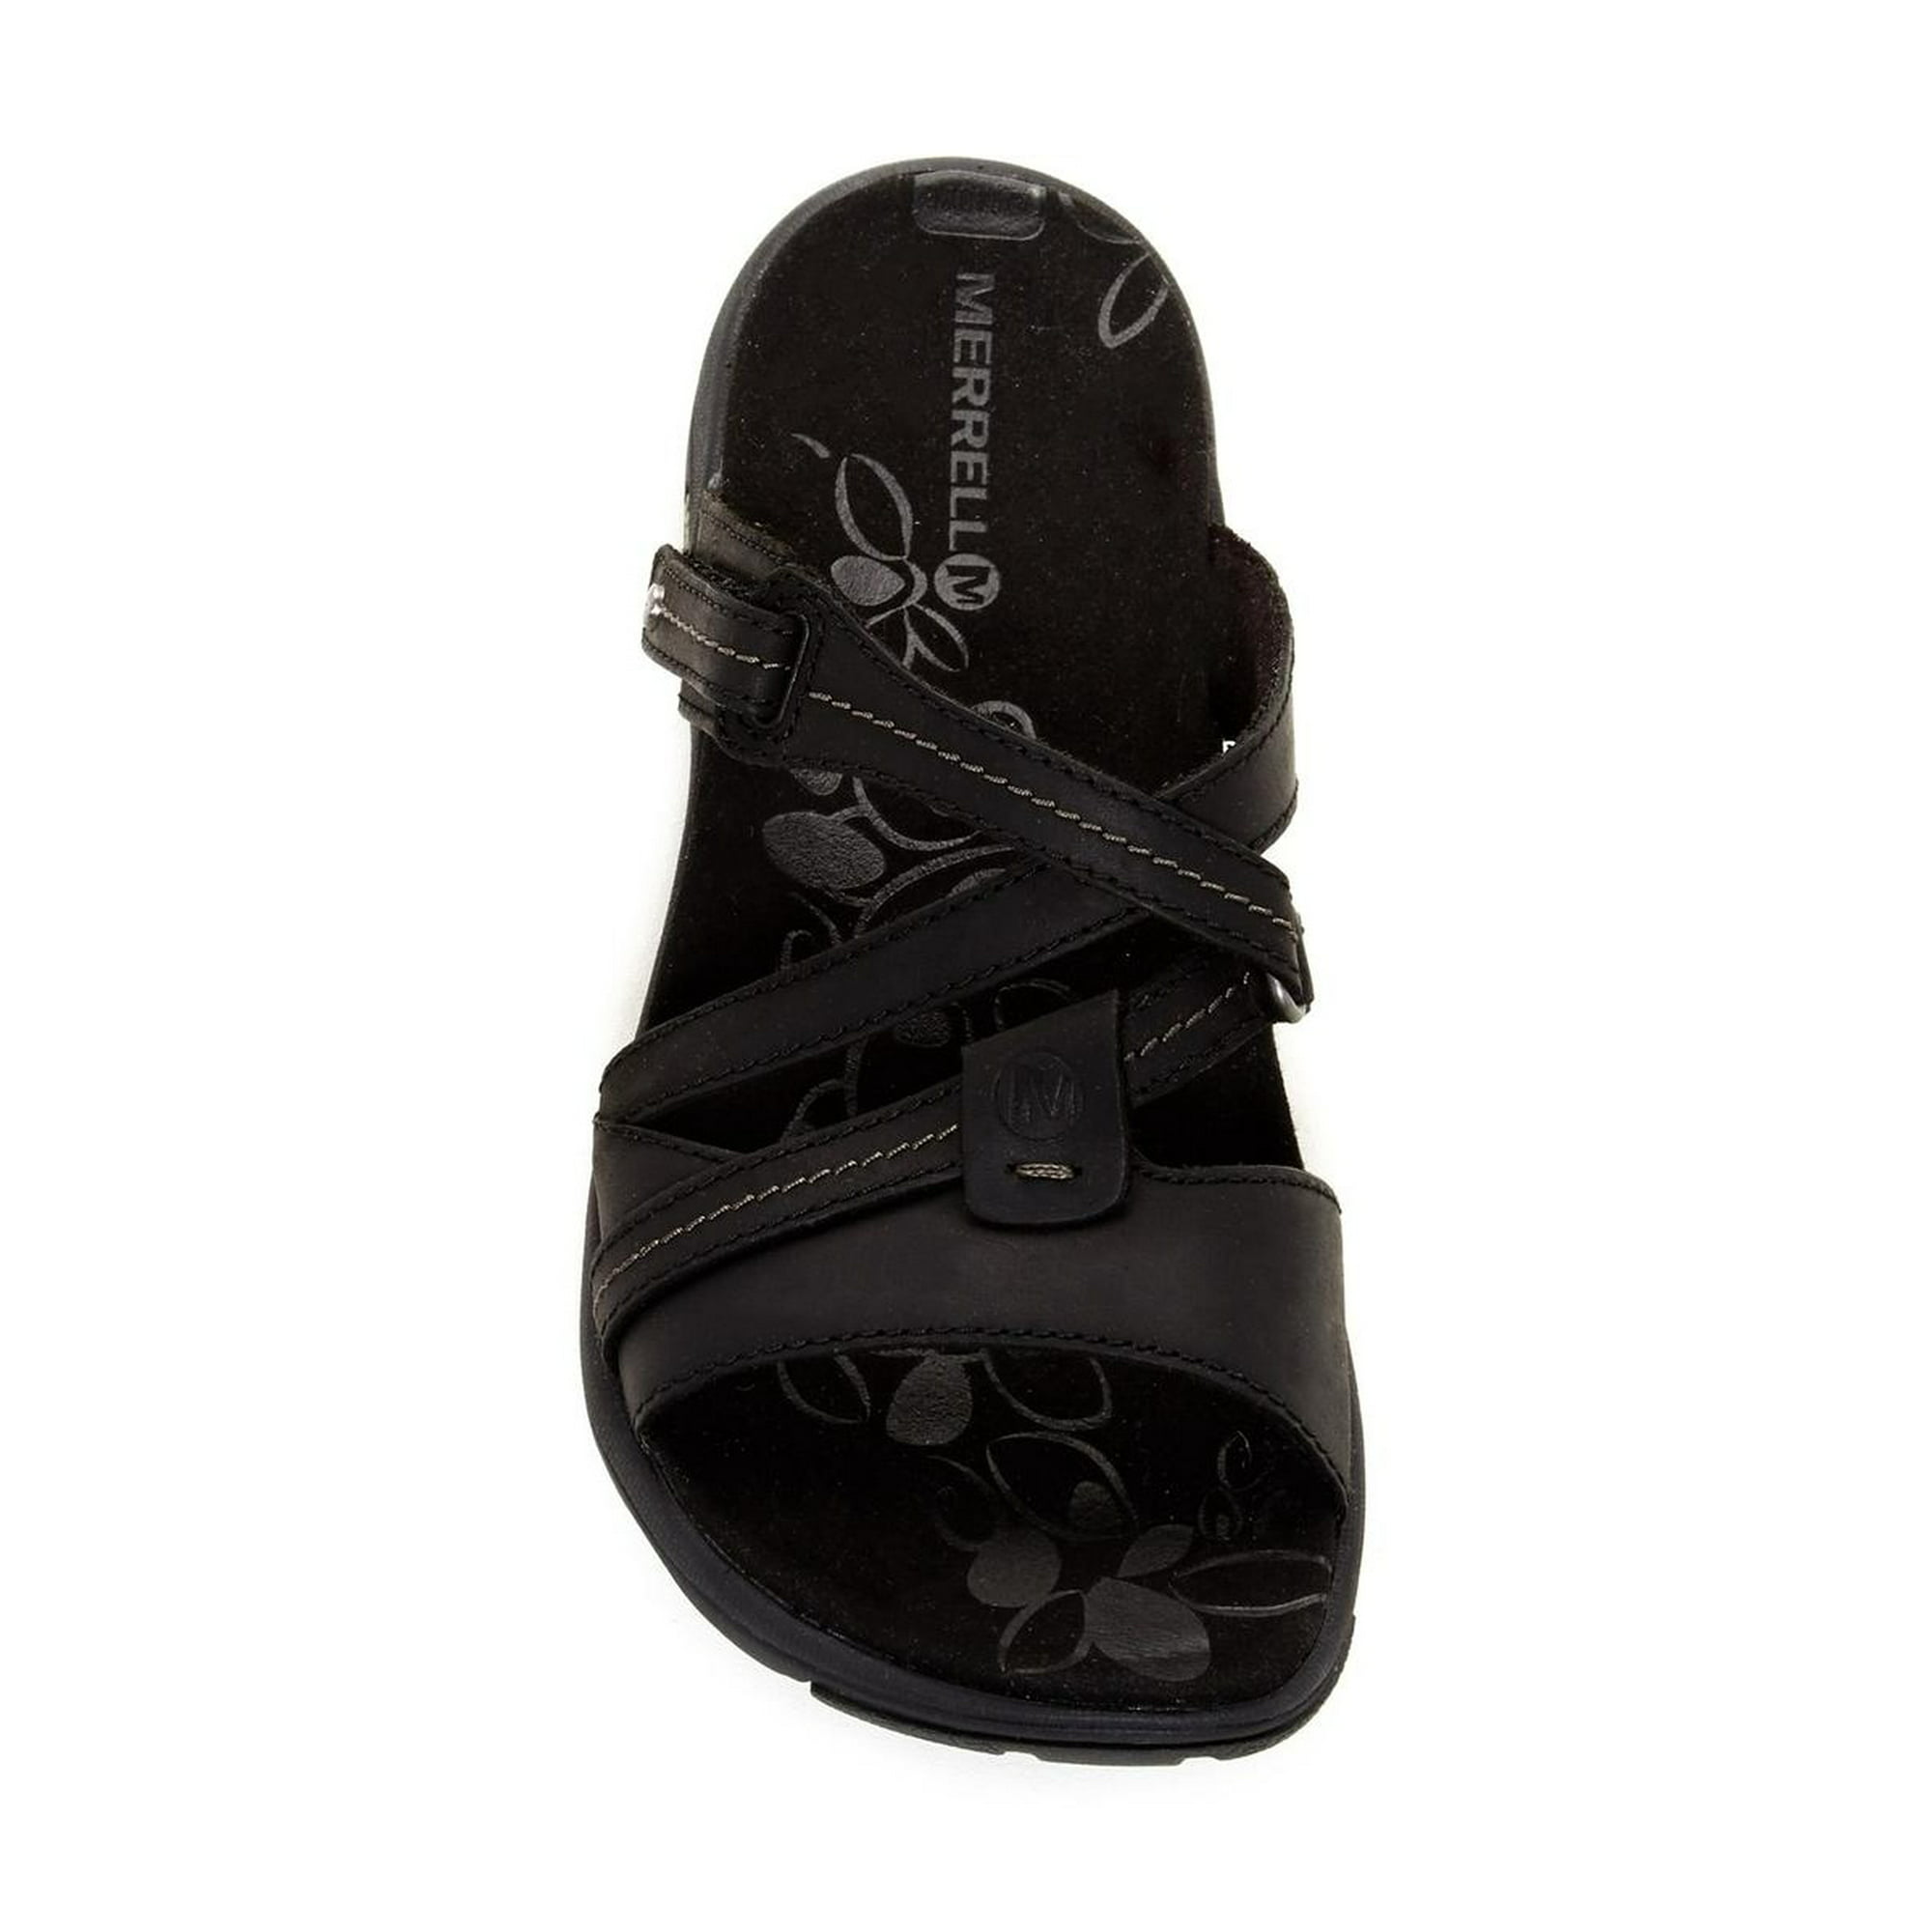 Merrell Sway leather Black Sandals Walmart.com